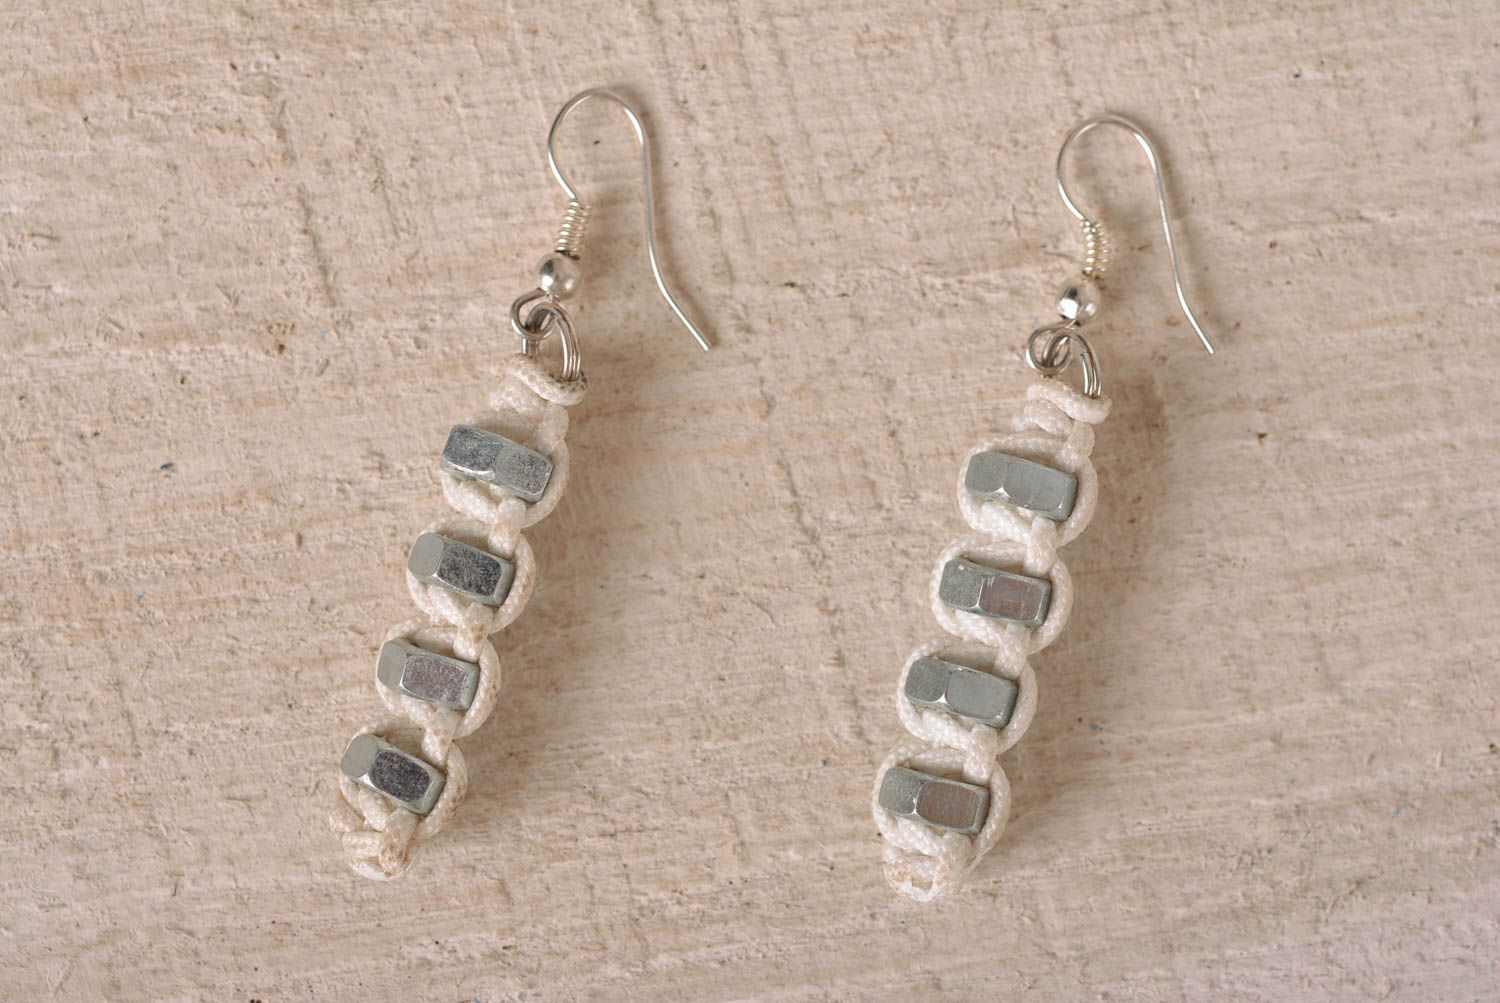 Woven stylish earrings macrame earrings handmade metal earrings with charms photo 1